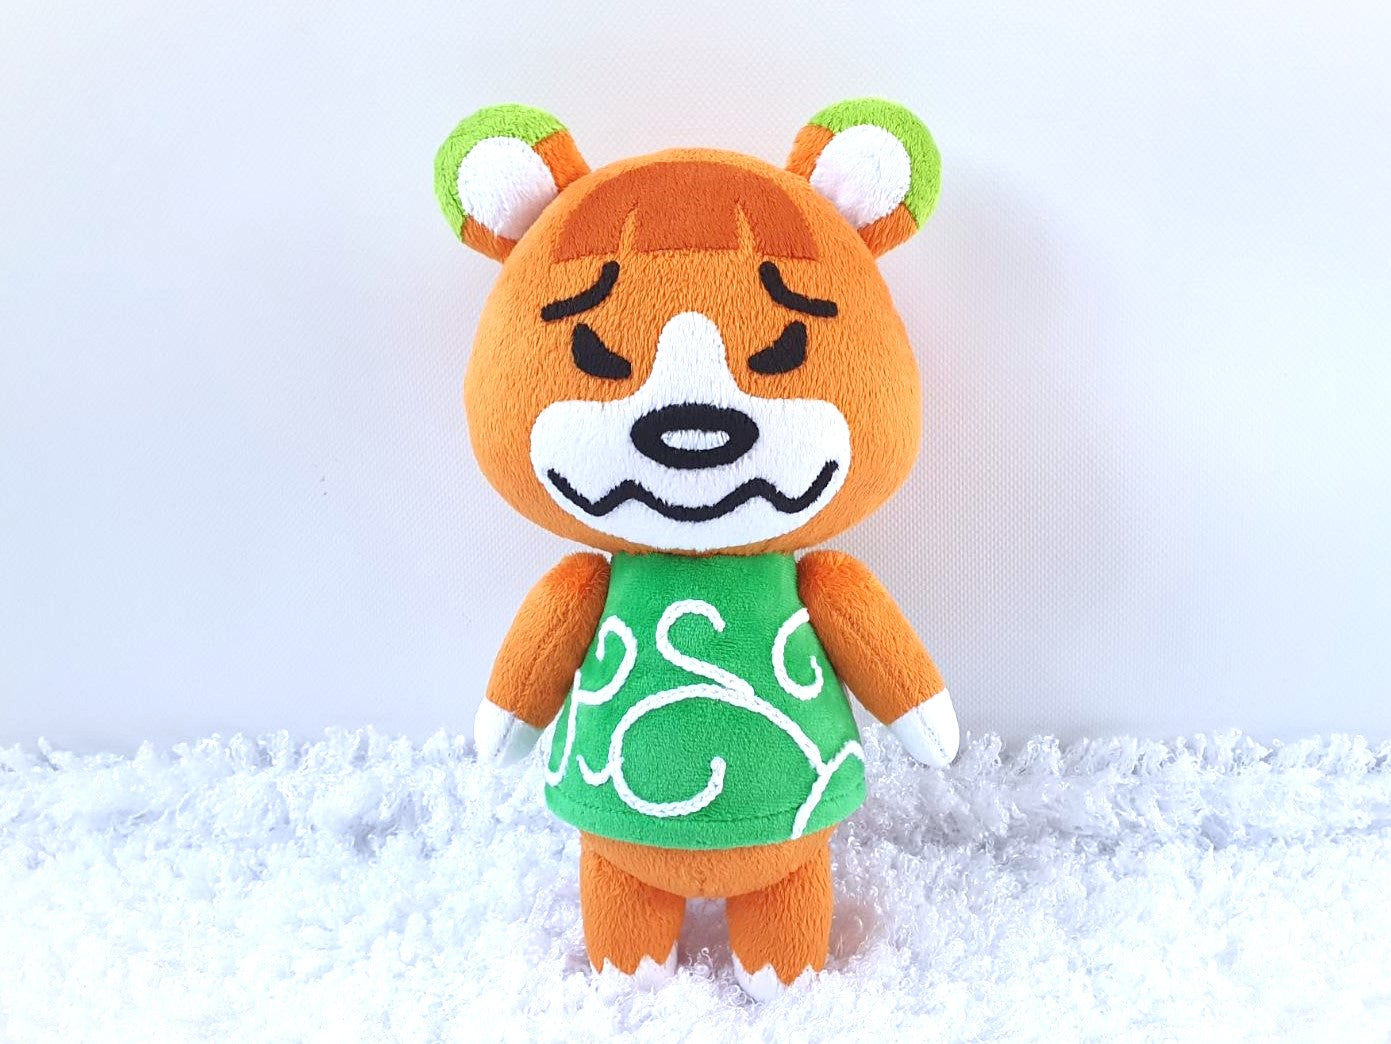 Handmade custom Pudge the cub bear plush